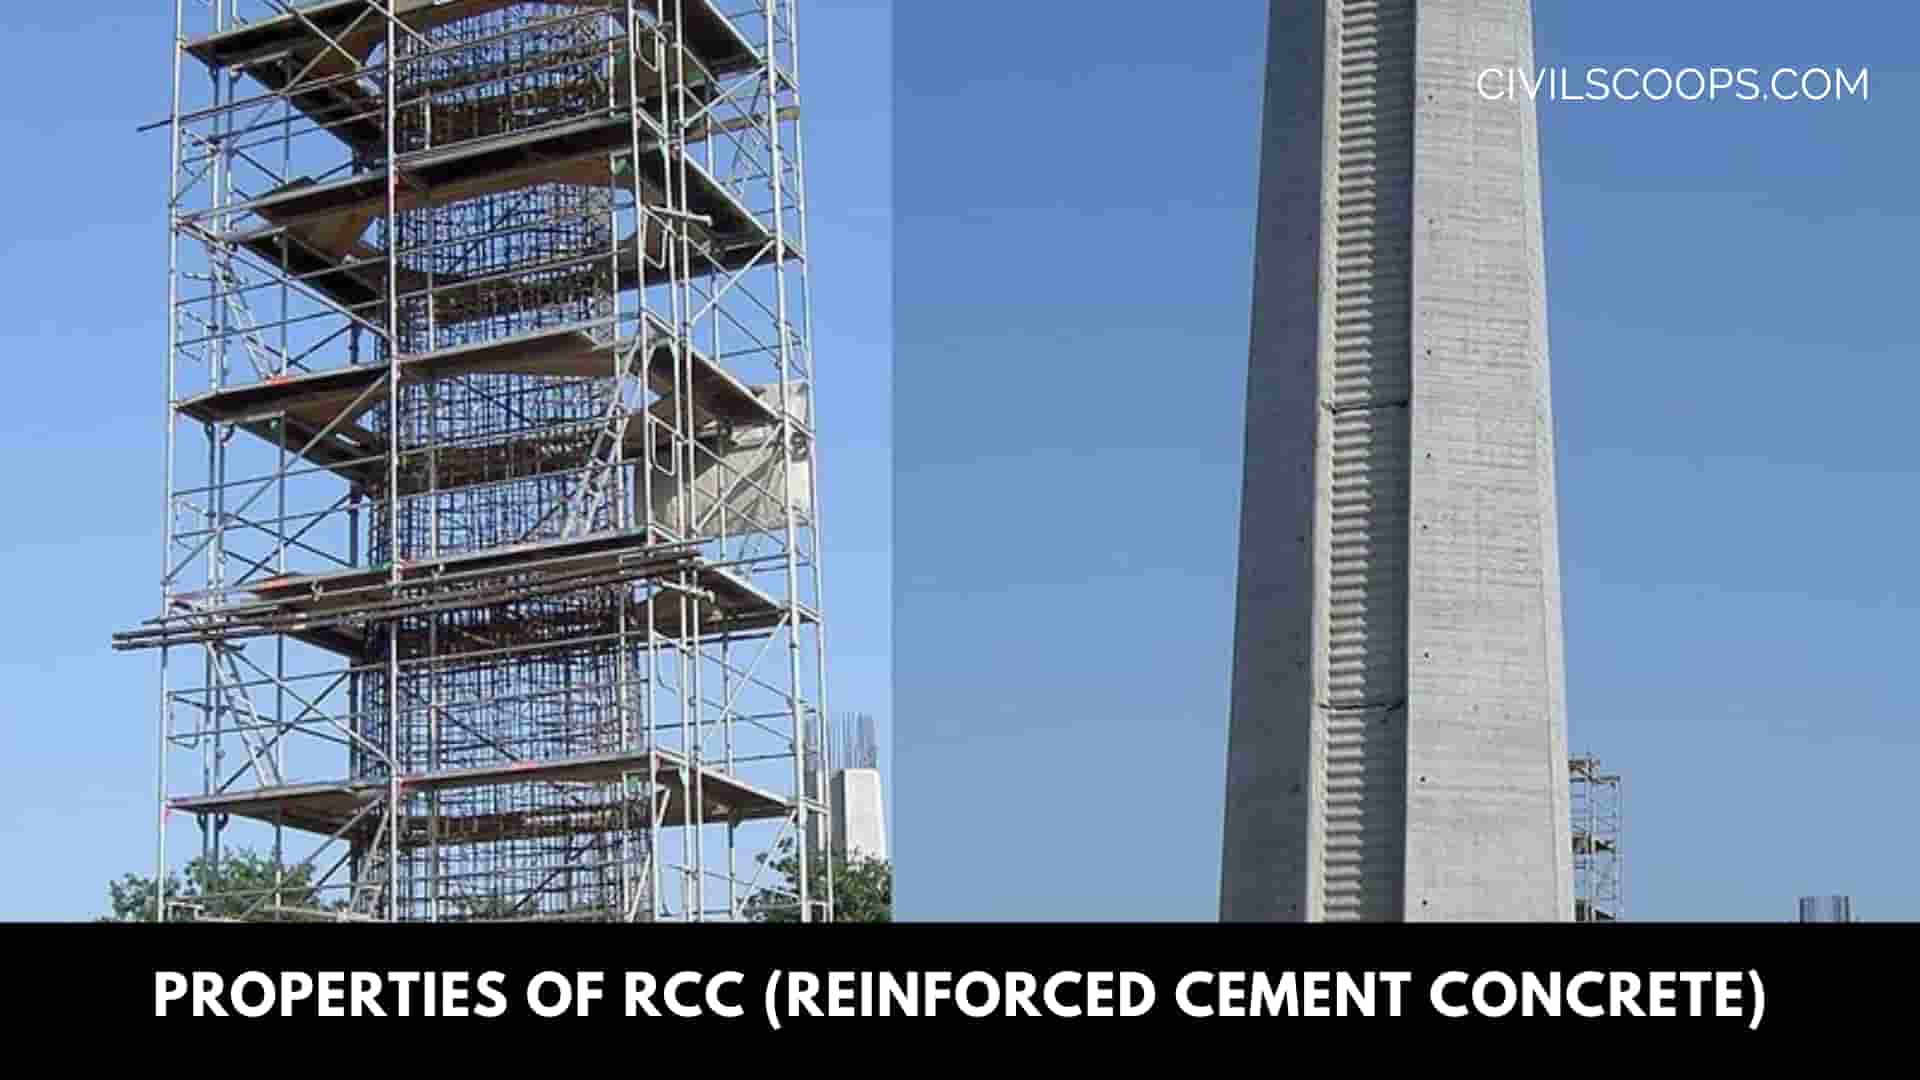 Properties of RCC (Reinforced Cement Concrete)